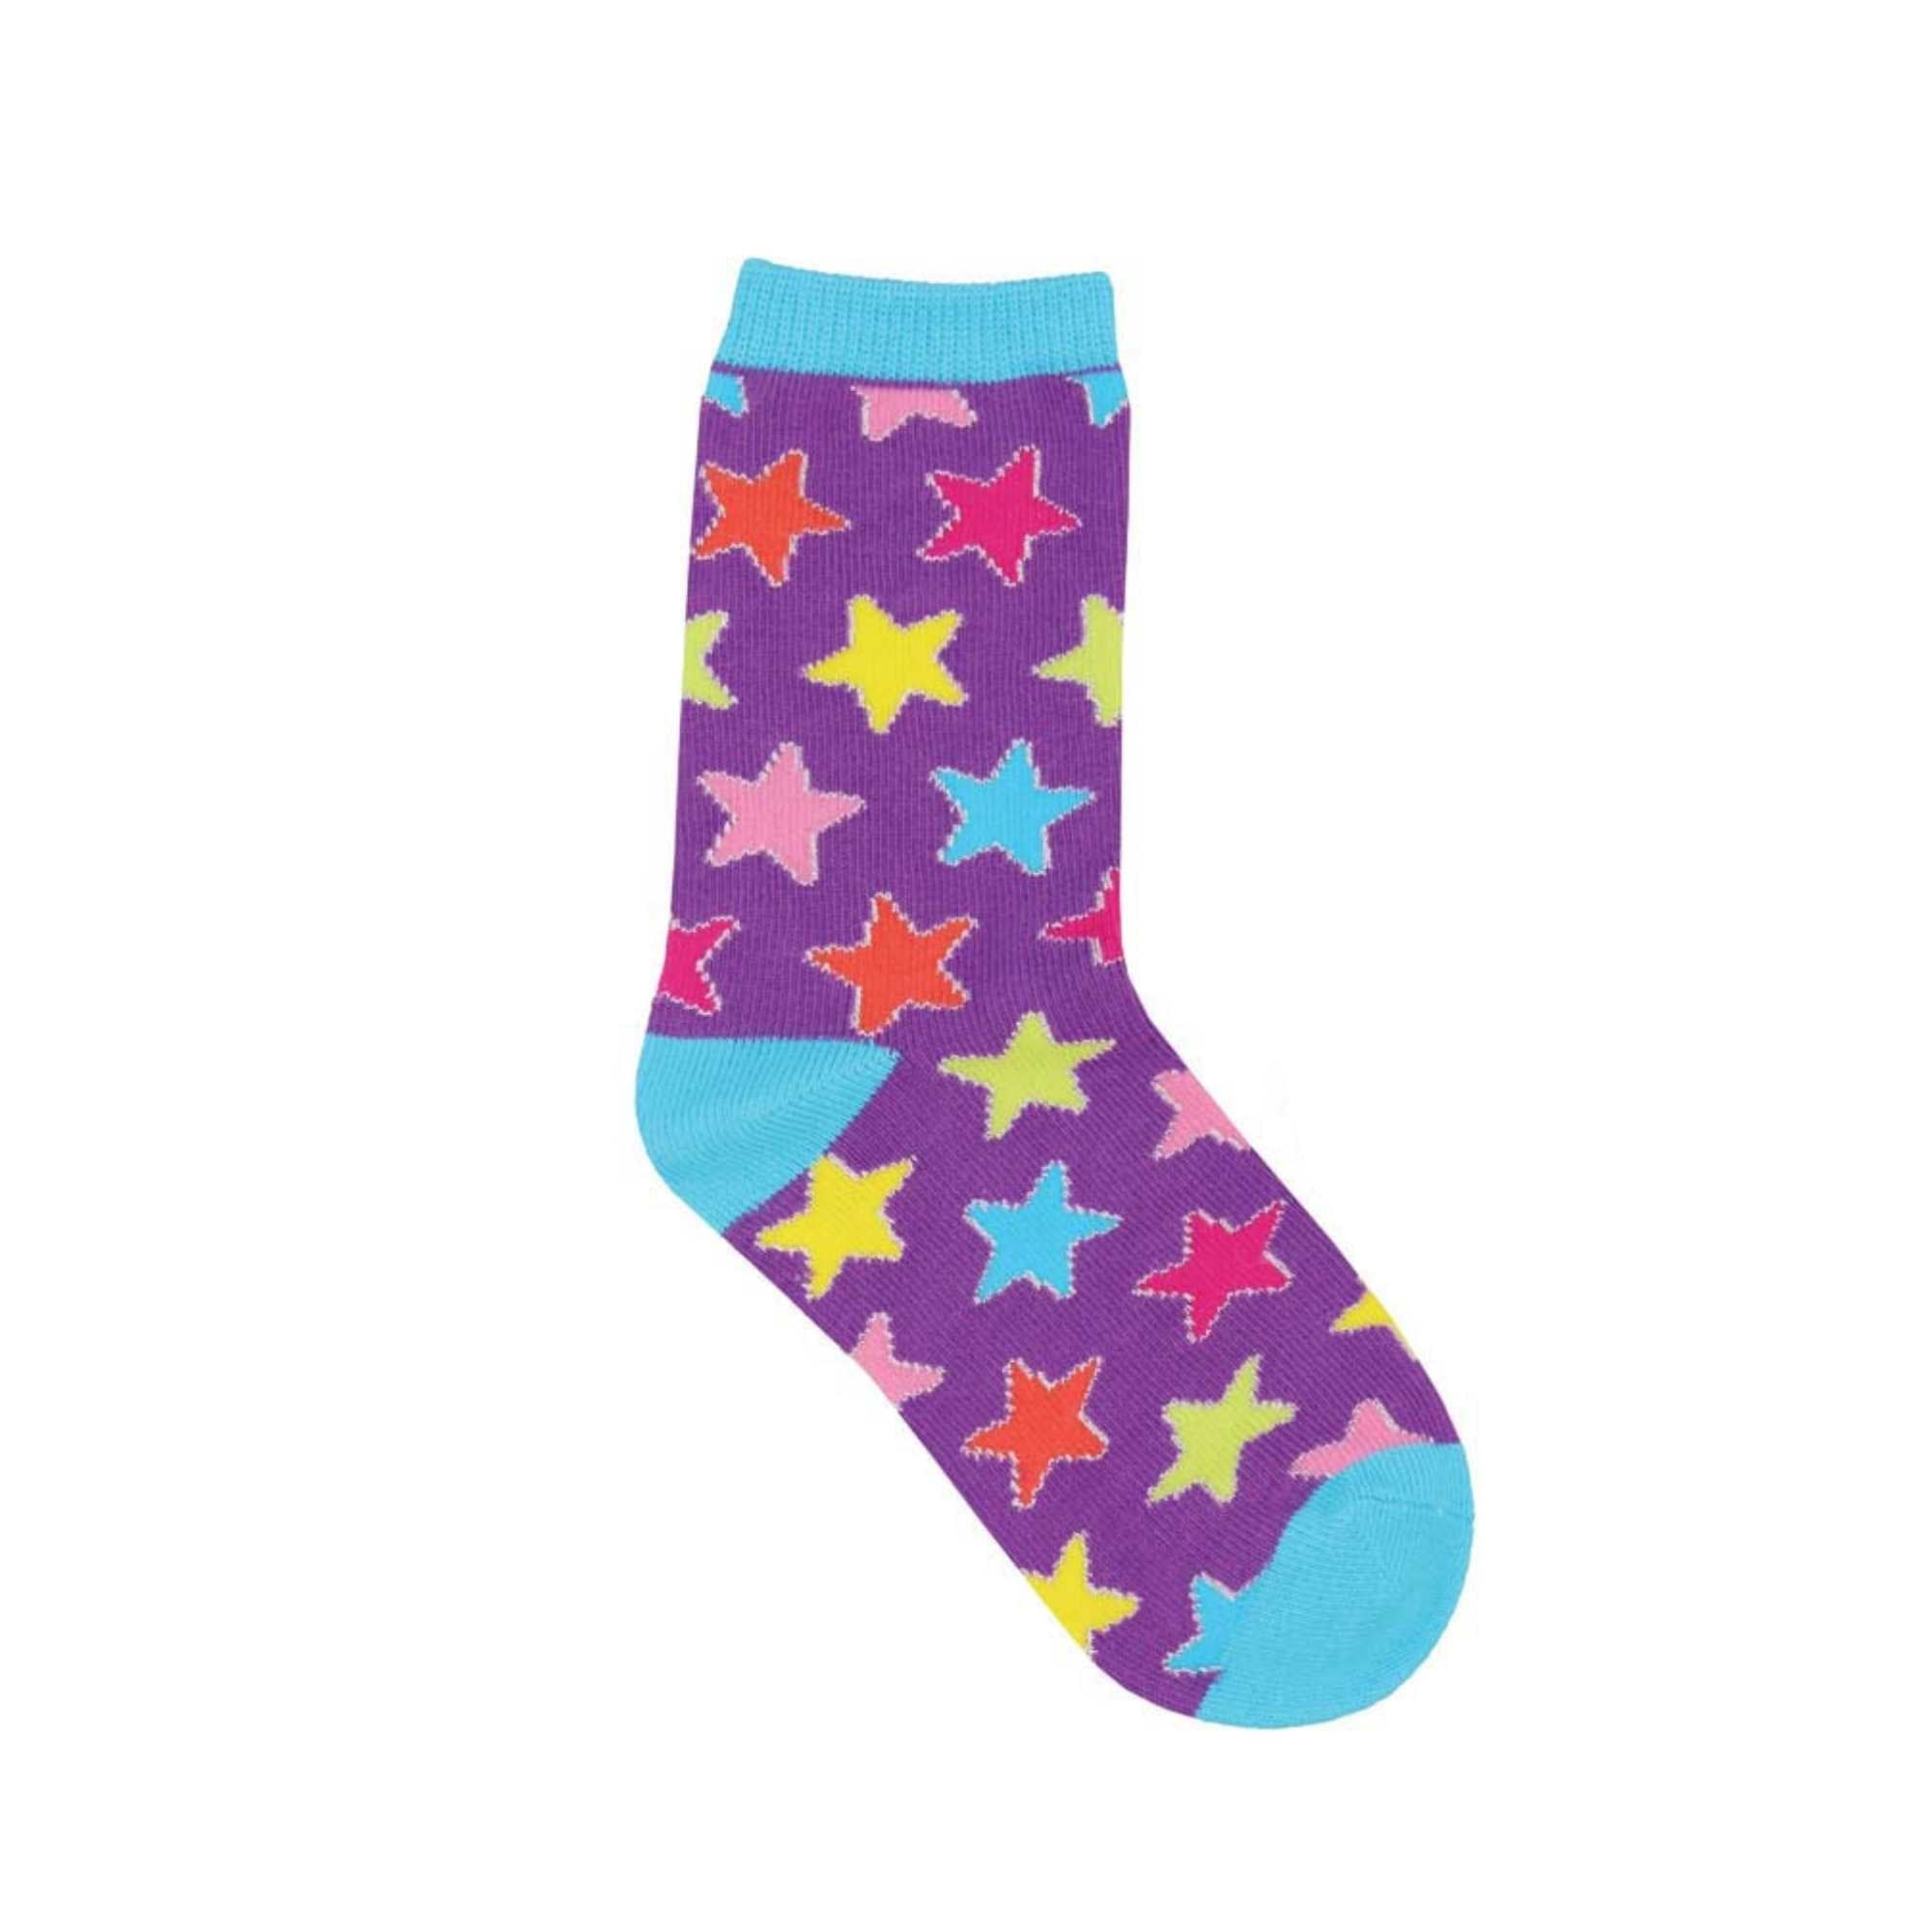 Colorful Stars Kids Socks (Ages 0-7)